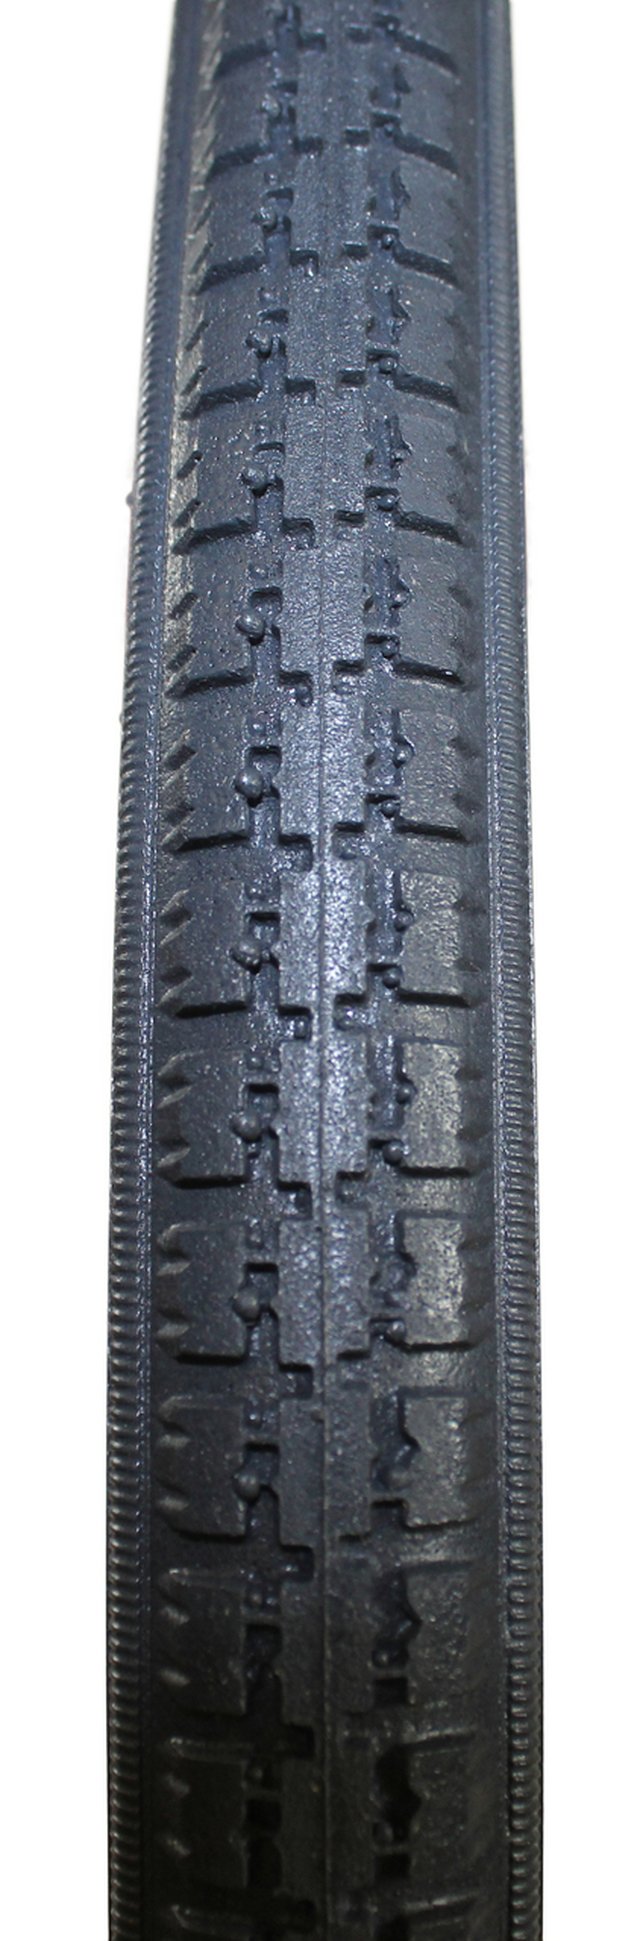 24 x 1 3/8" Dark Gray Pr1mo Orion Urethane Street Tire